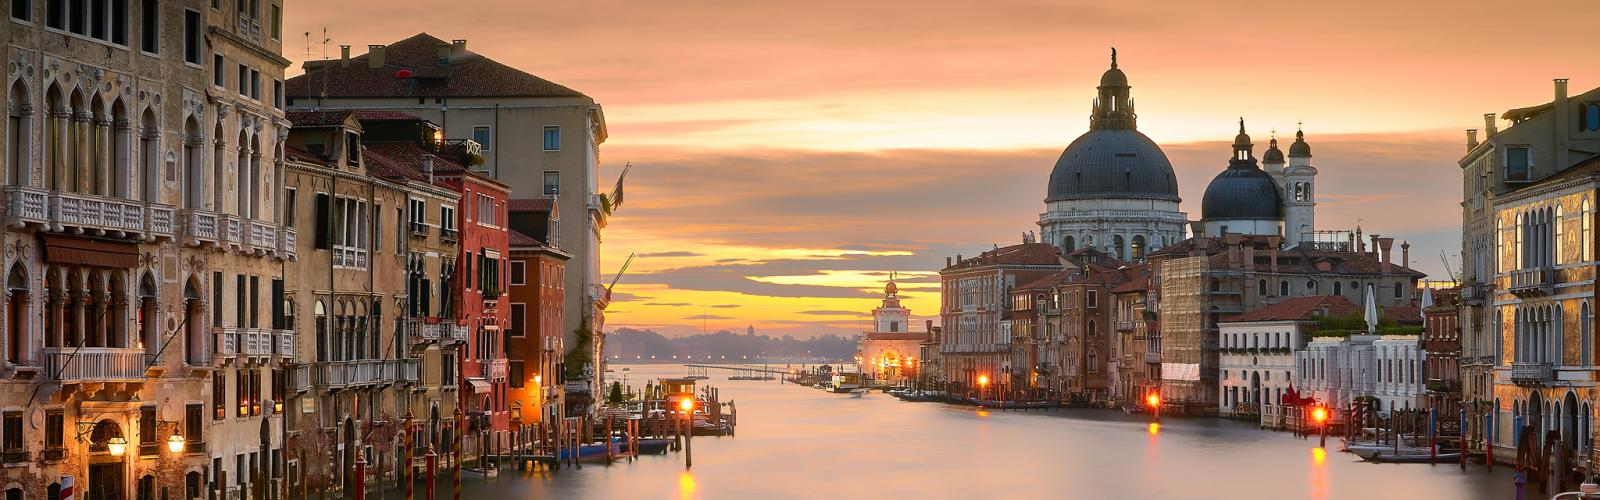 Tronchetto - San Marco Venezia